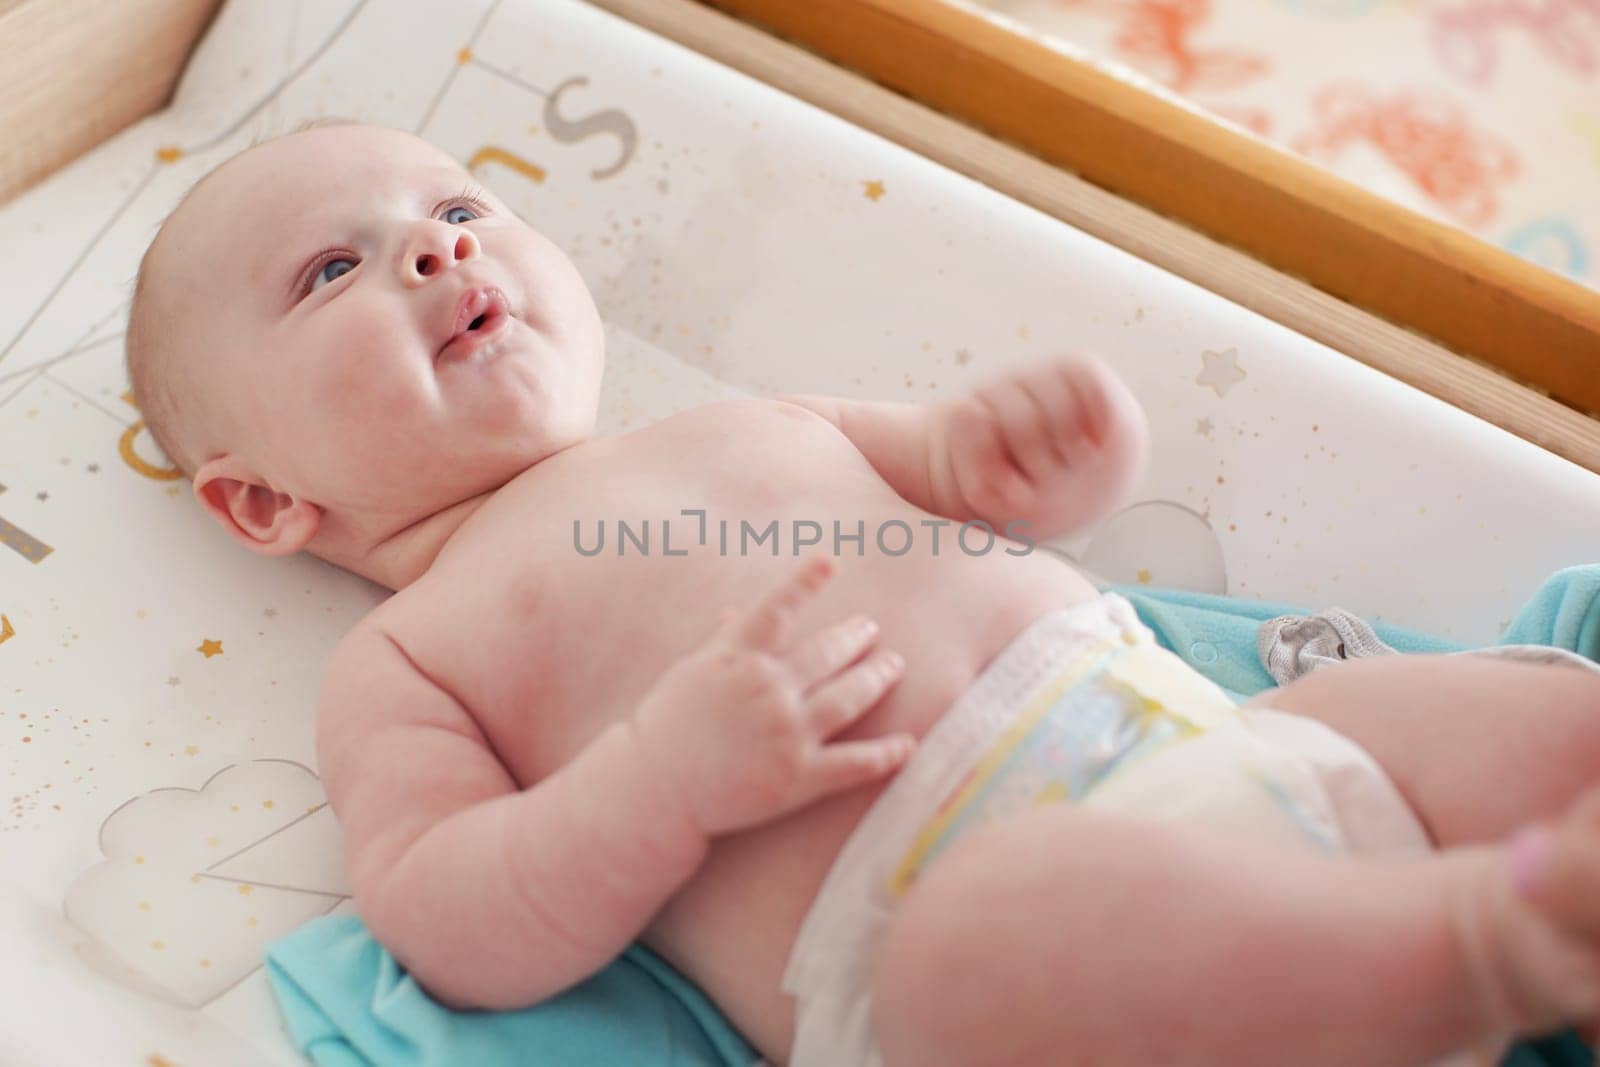 4 months old infant boy lying on changing desk,